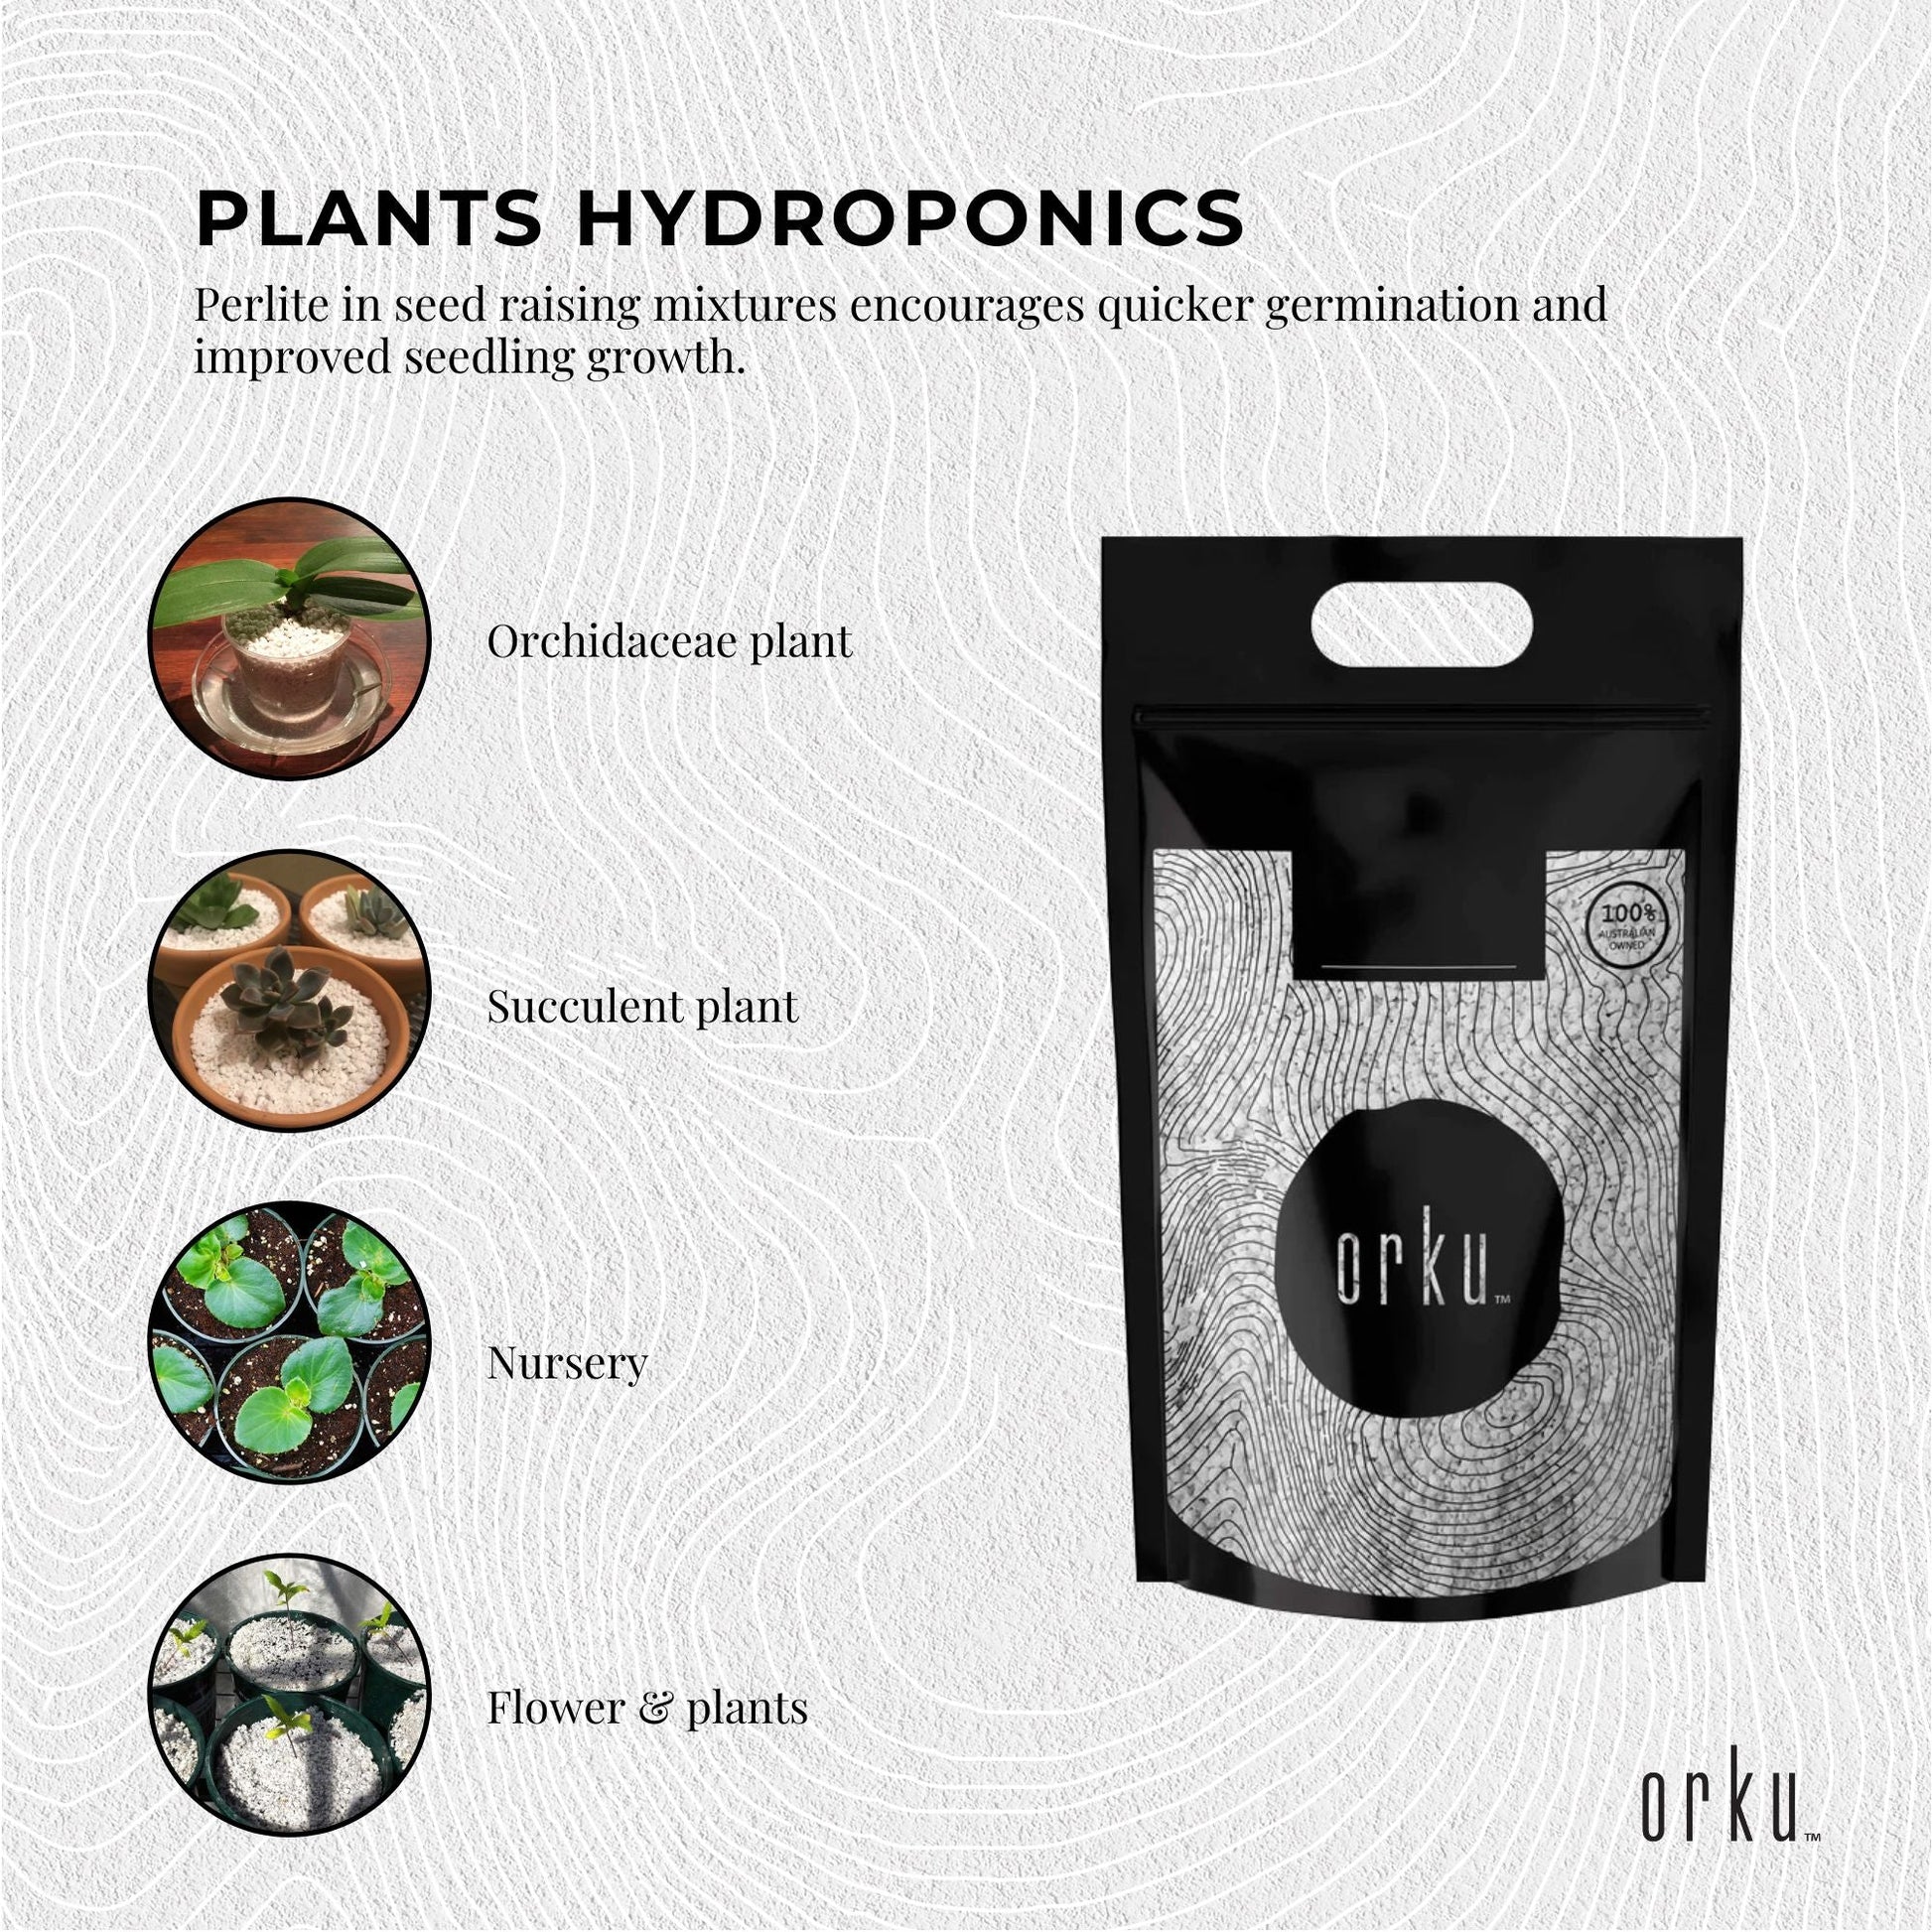 20L Perlite Coarse Premium Soil Expanded Medium Plants Hydroponics